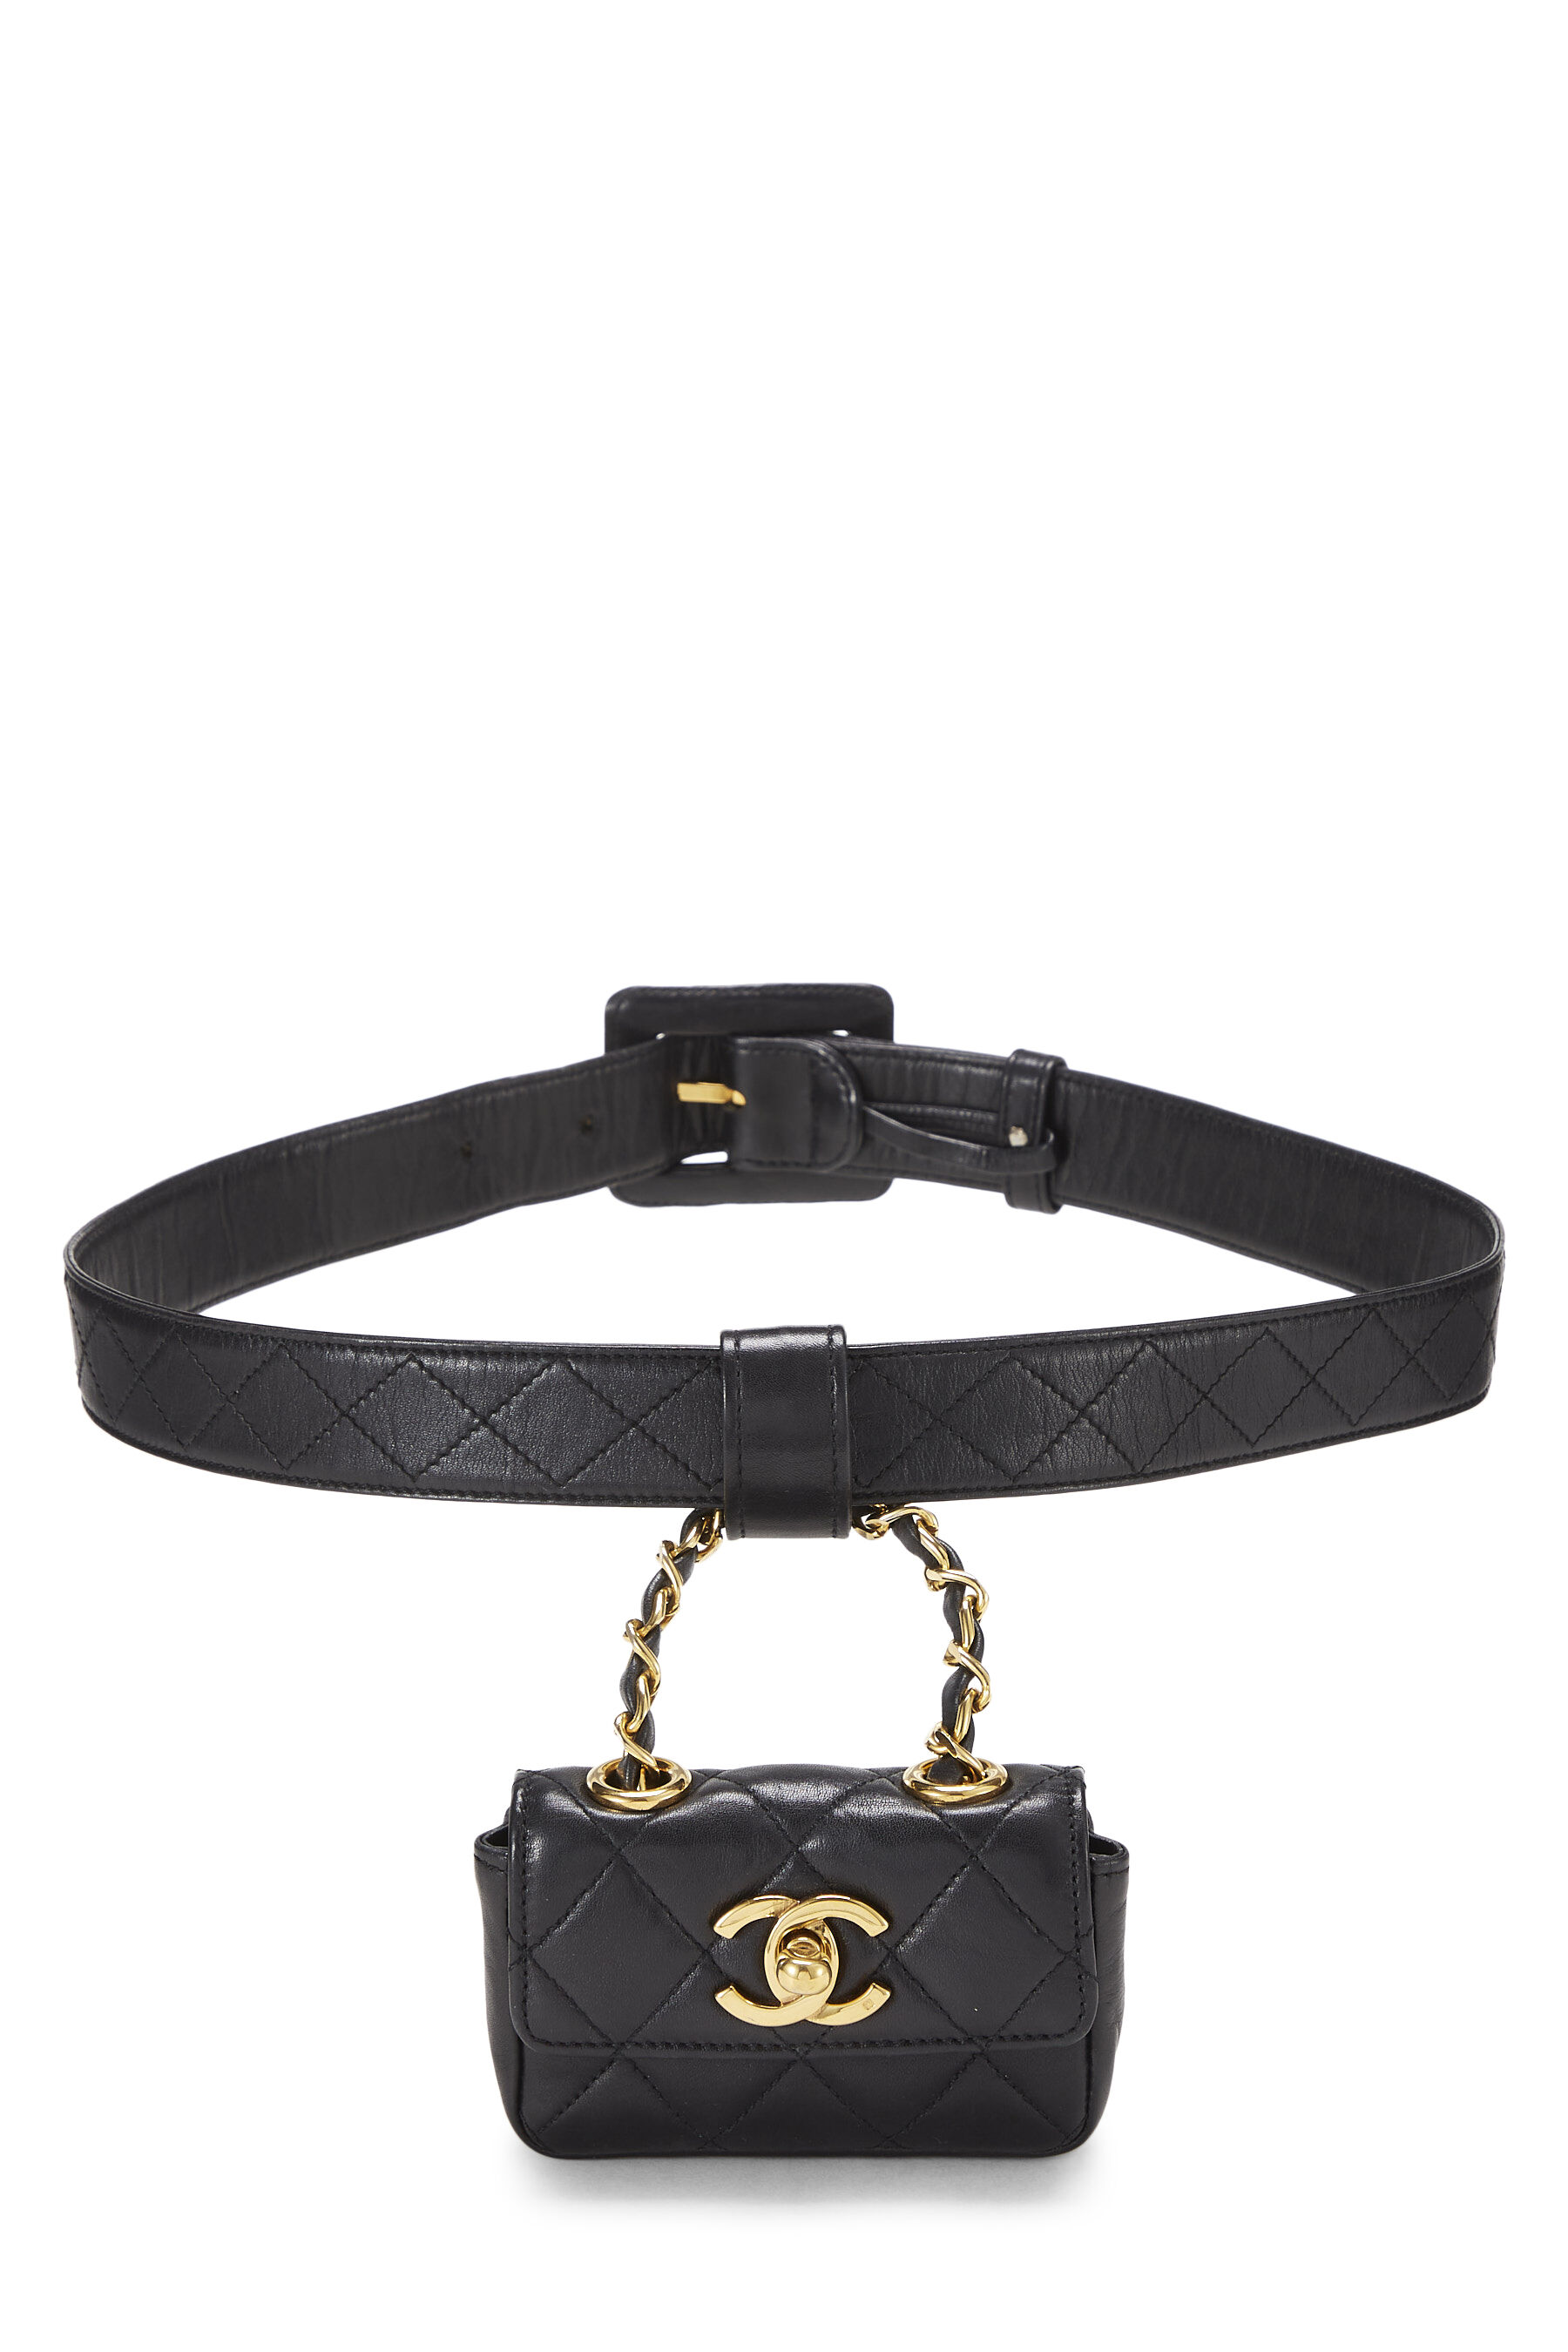 Chanel - Black Quilted Lambskin Belt Bag